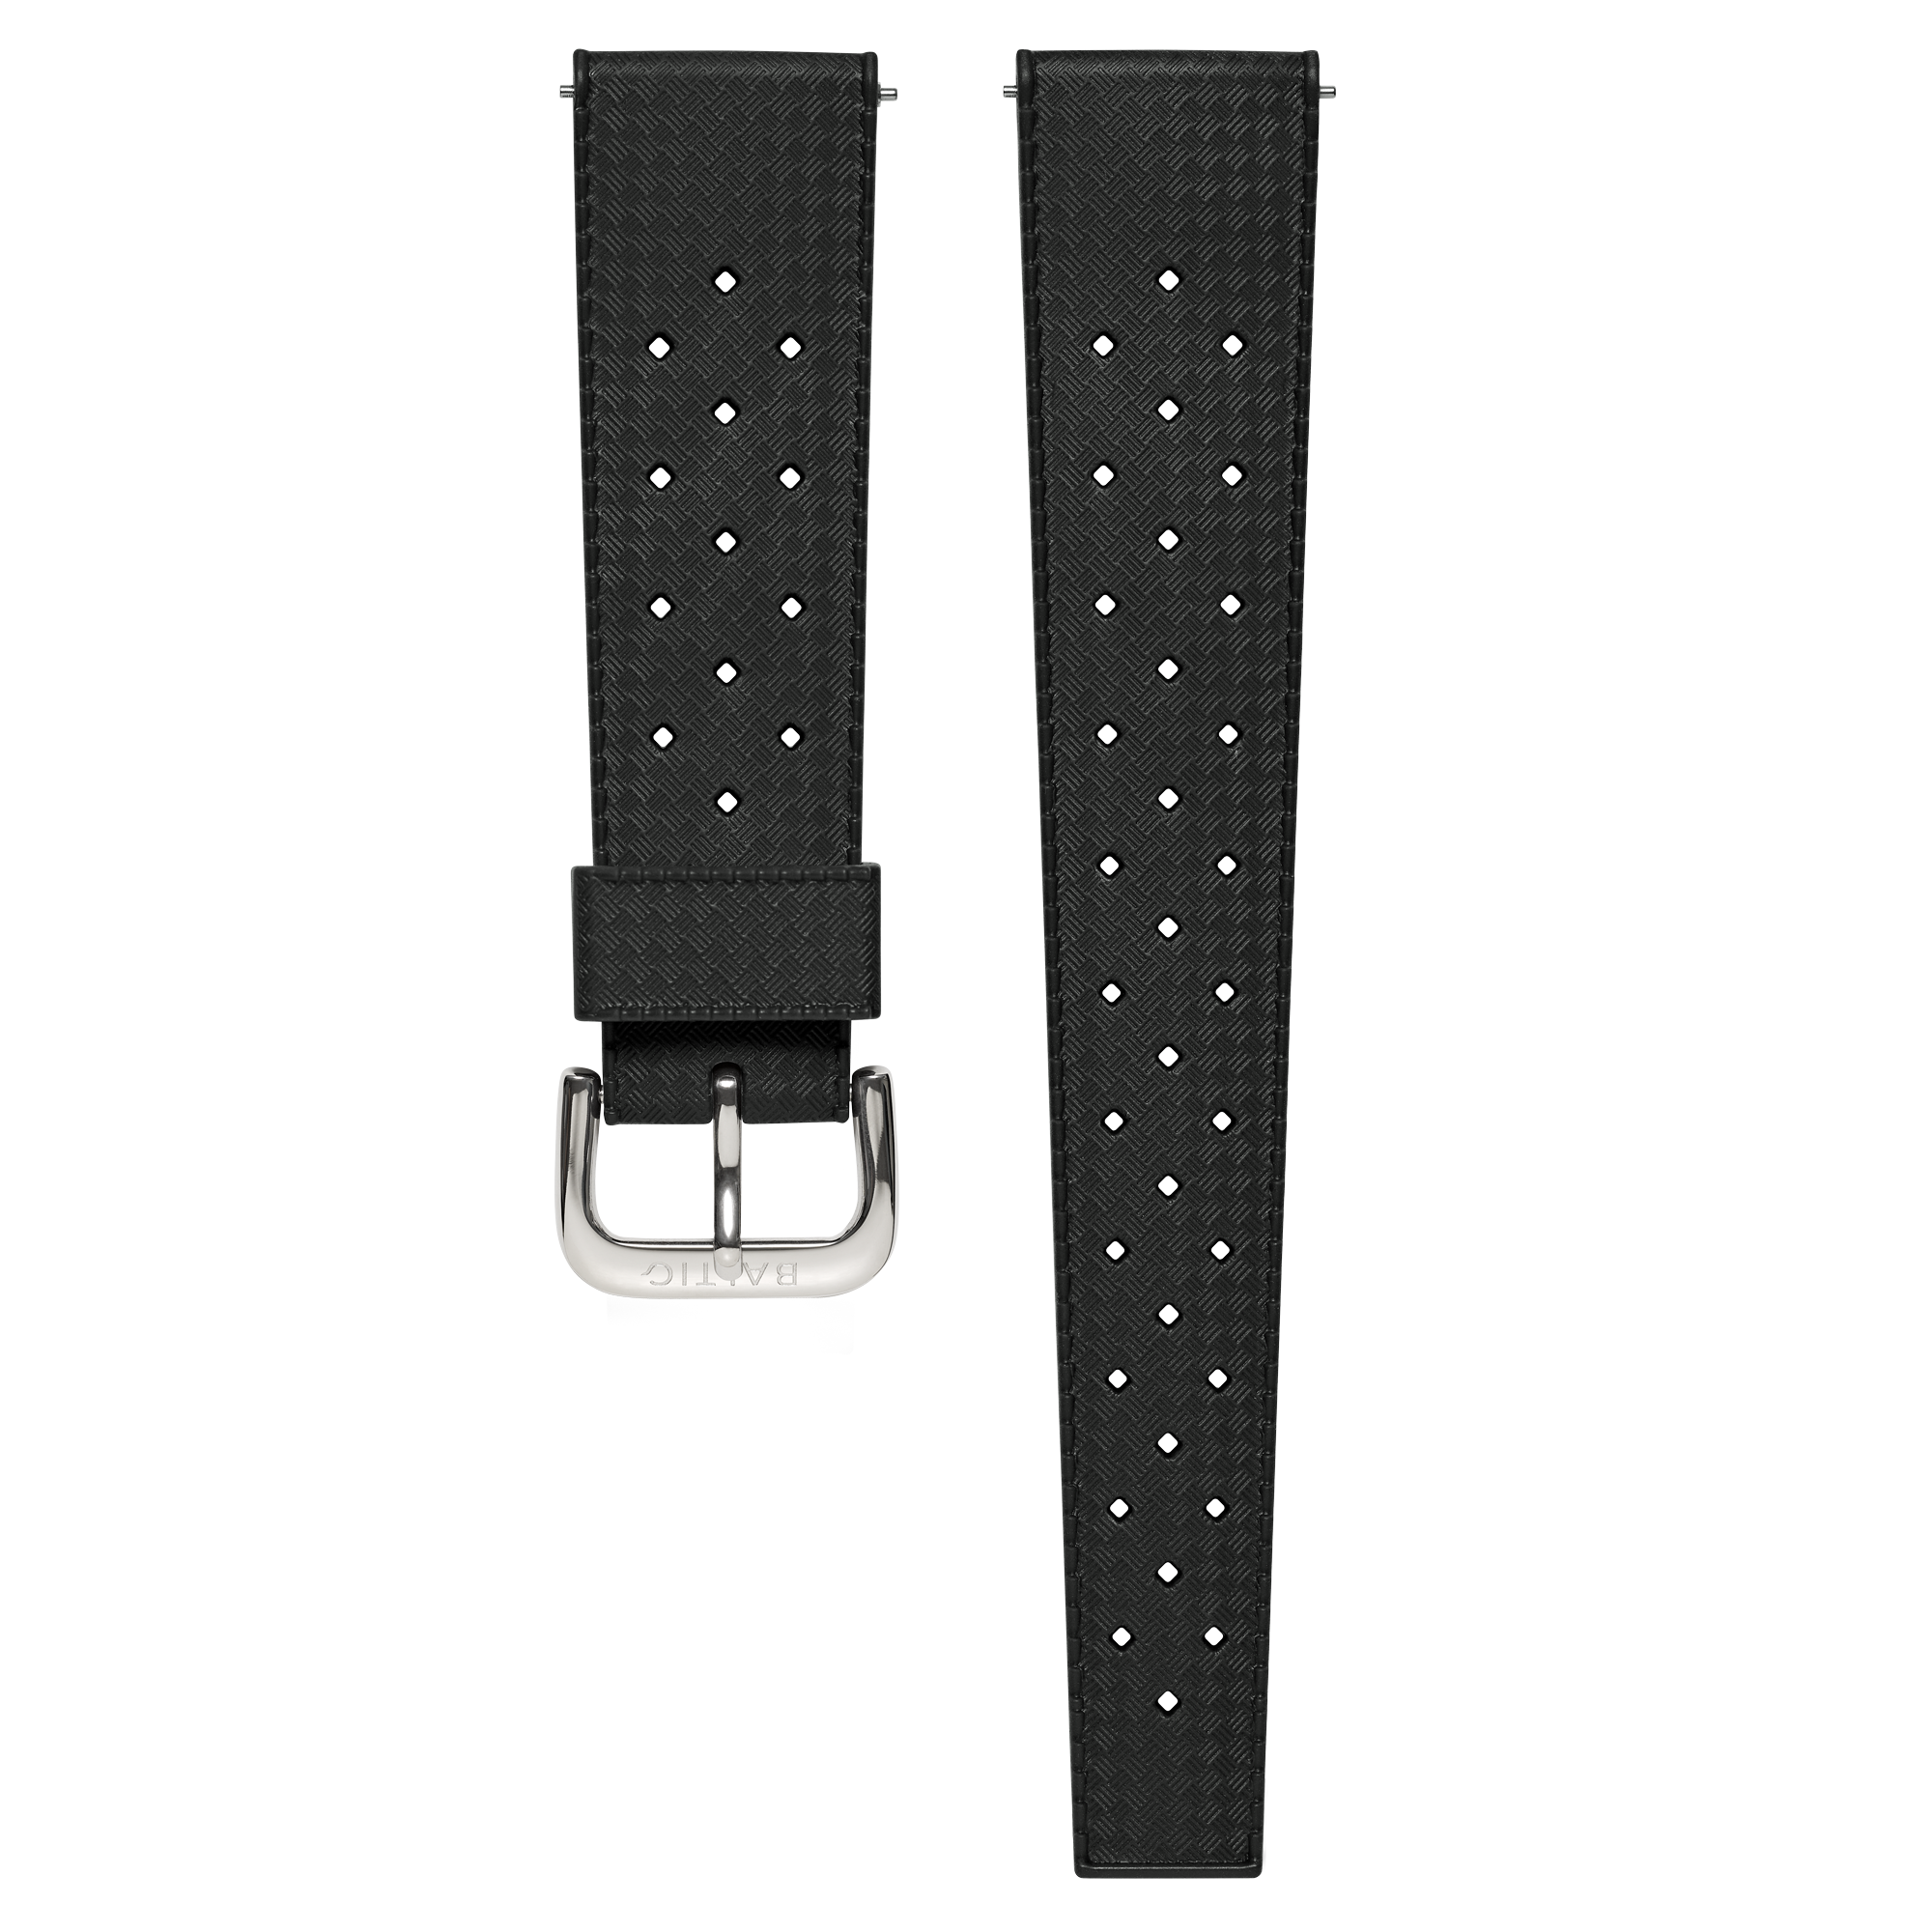 Aquascaphe Classic Black Silver - Baltic Watches